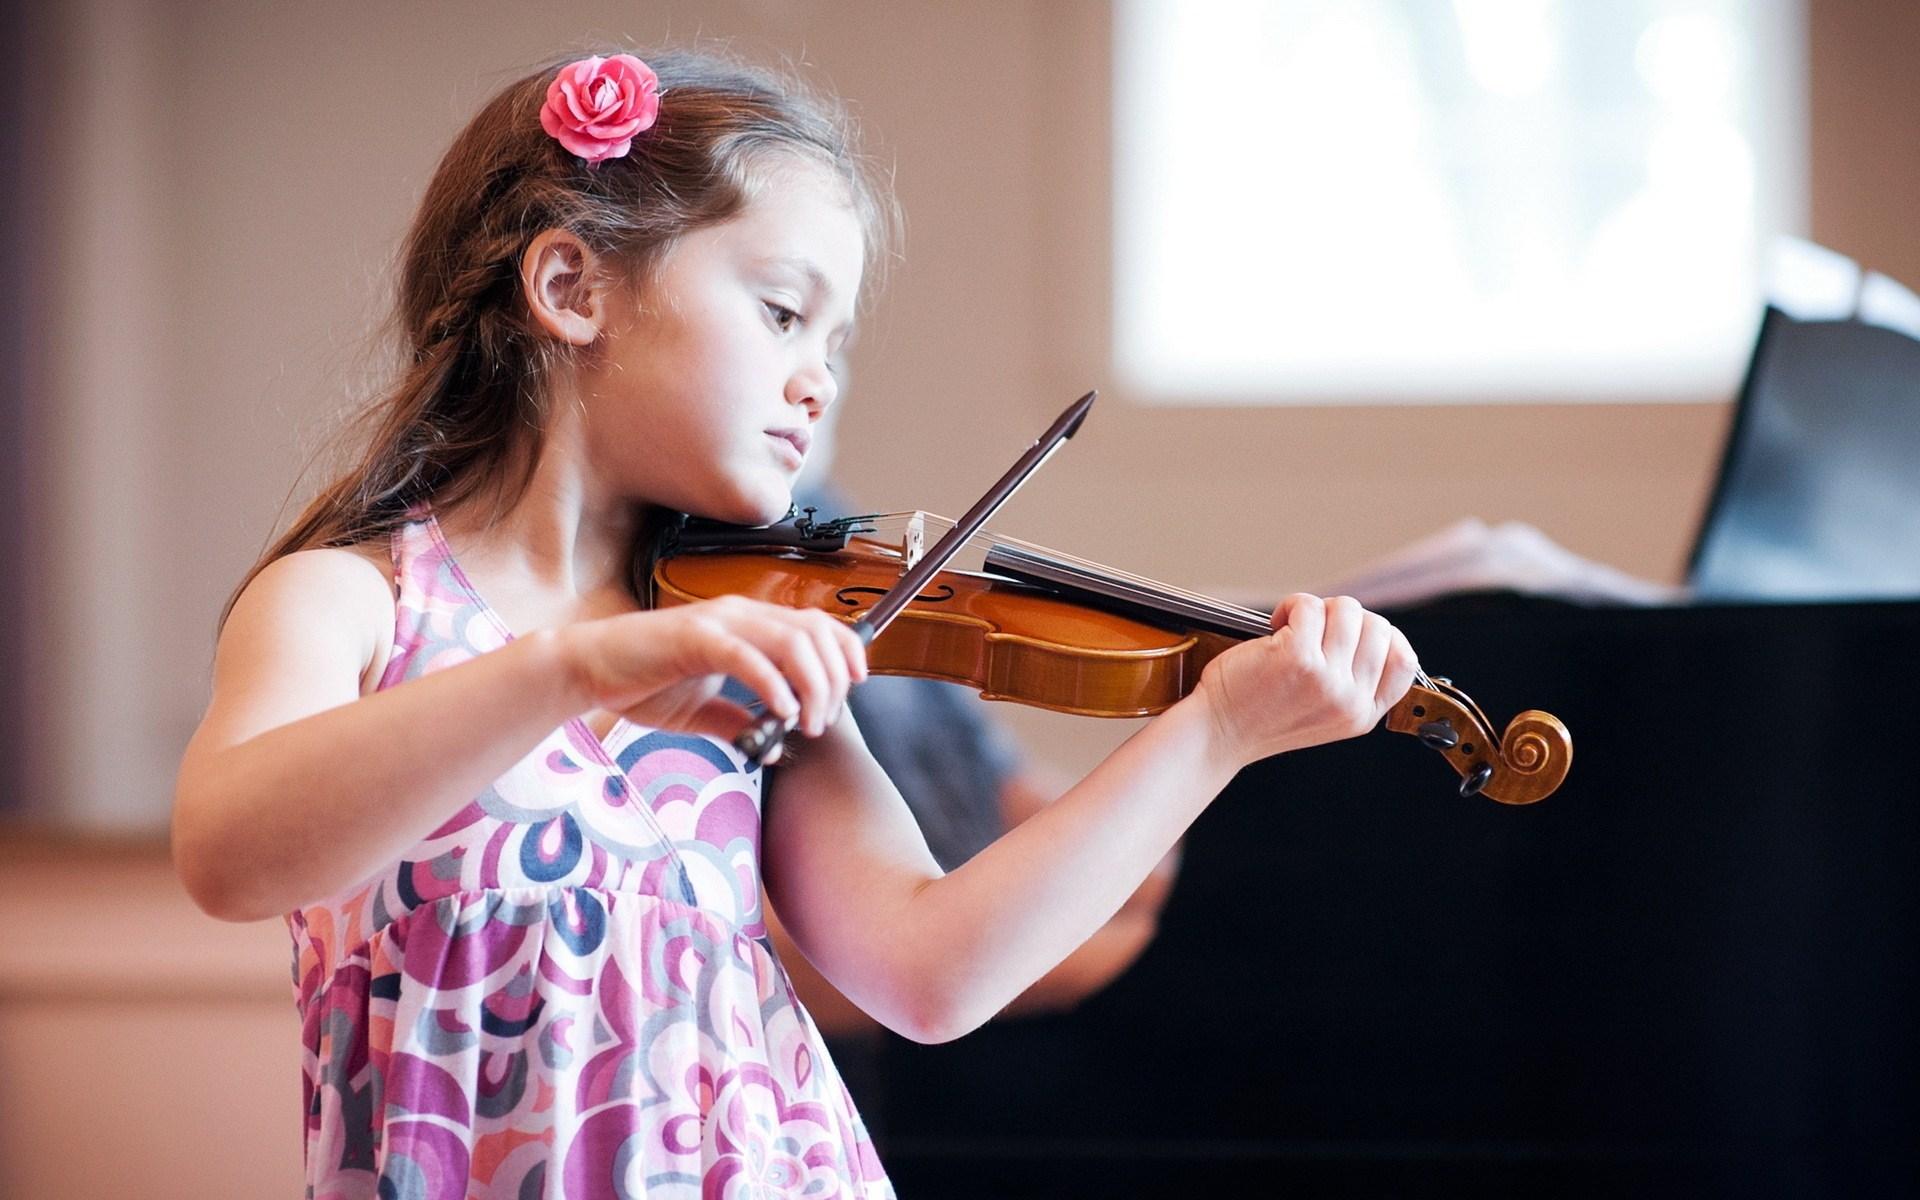 10 причин учить ребенка музыке